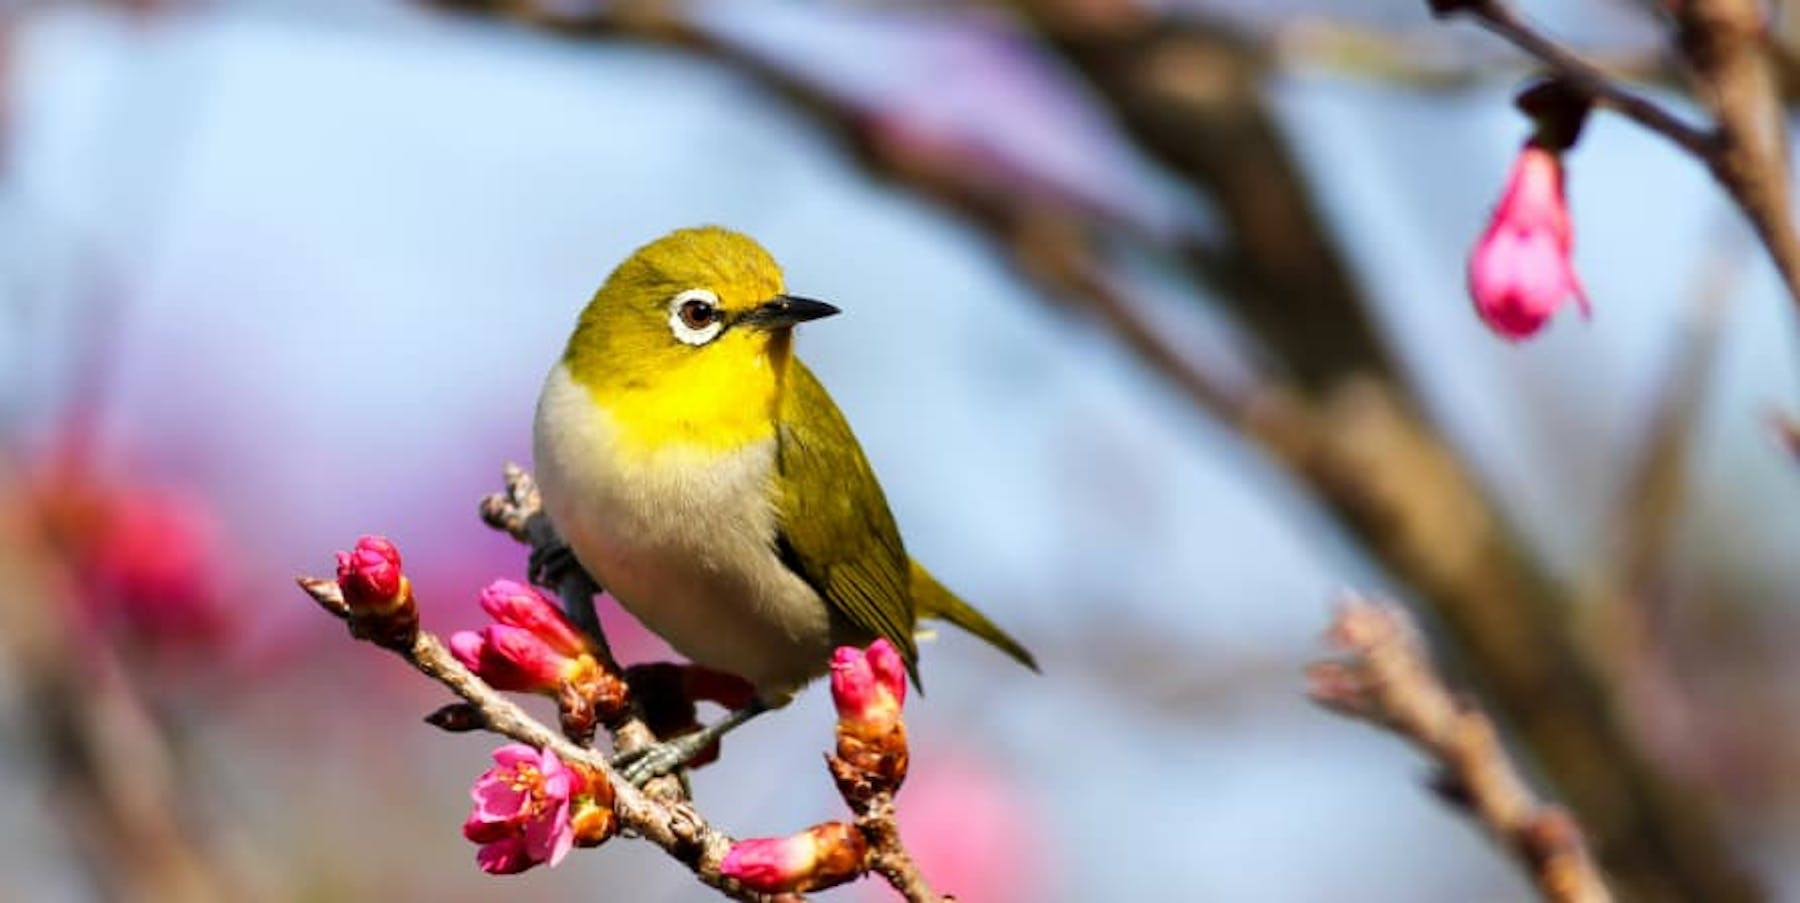 small yellow bird on bright pink cherry blossom branch